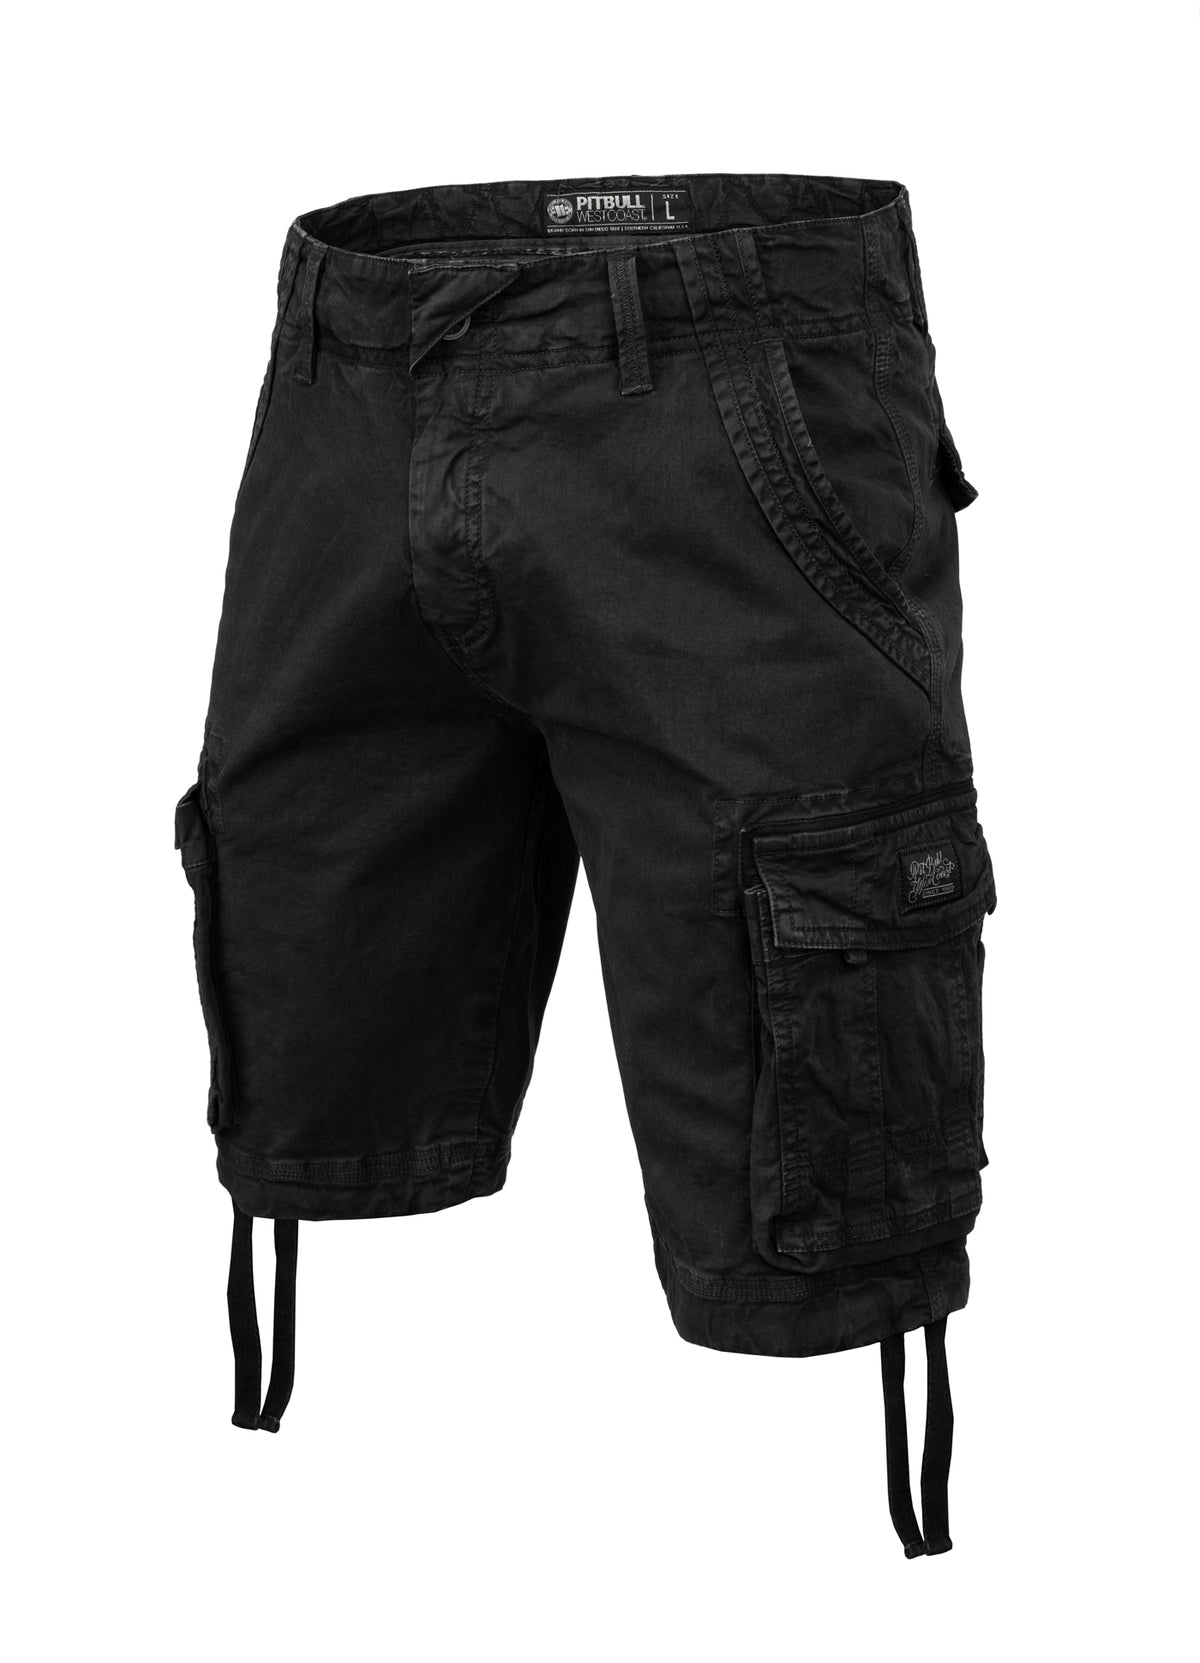 CARVER Cargo shorts Black.